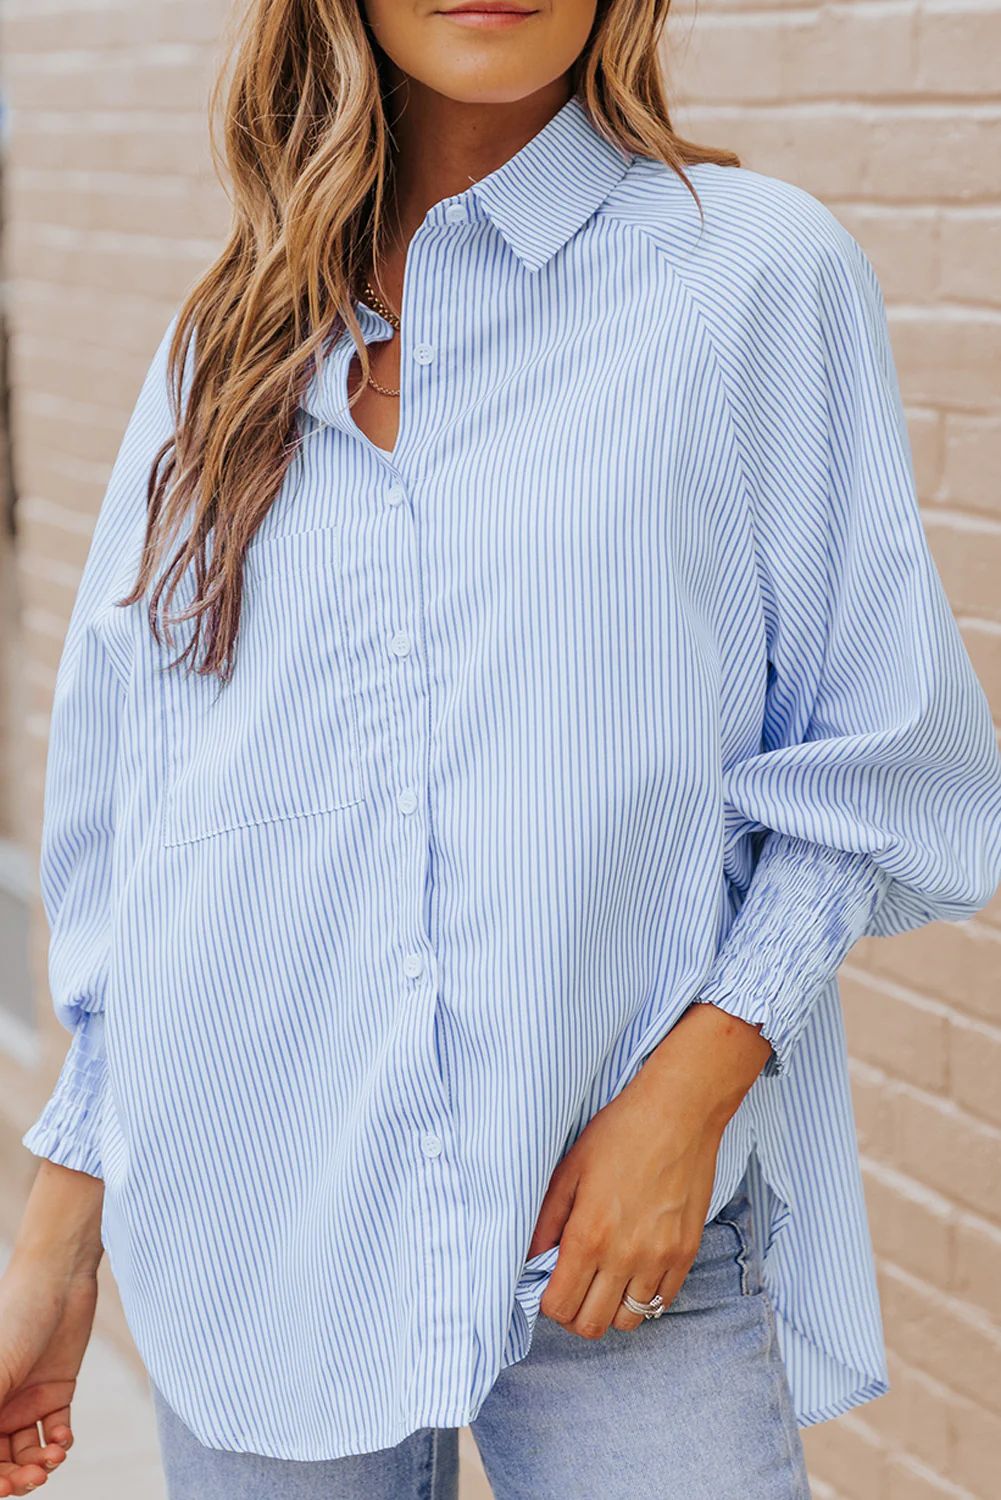 Smocked Cuffed Striped Boyfriend Shirt with Pocket | Jane Fashion INC.